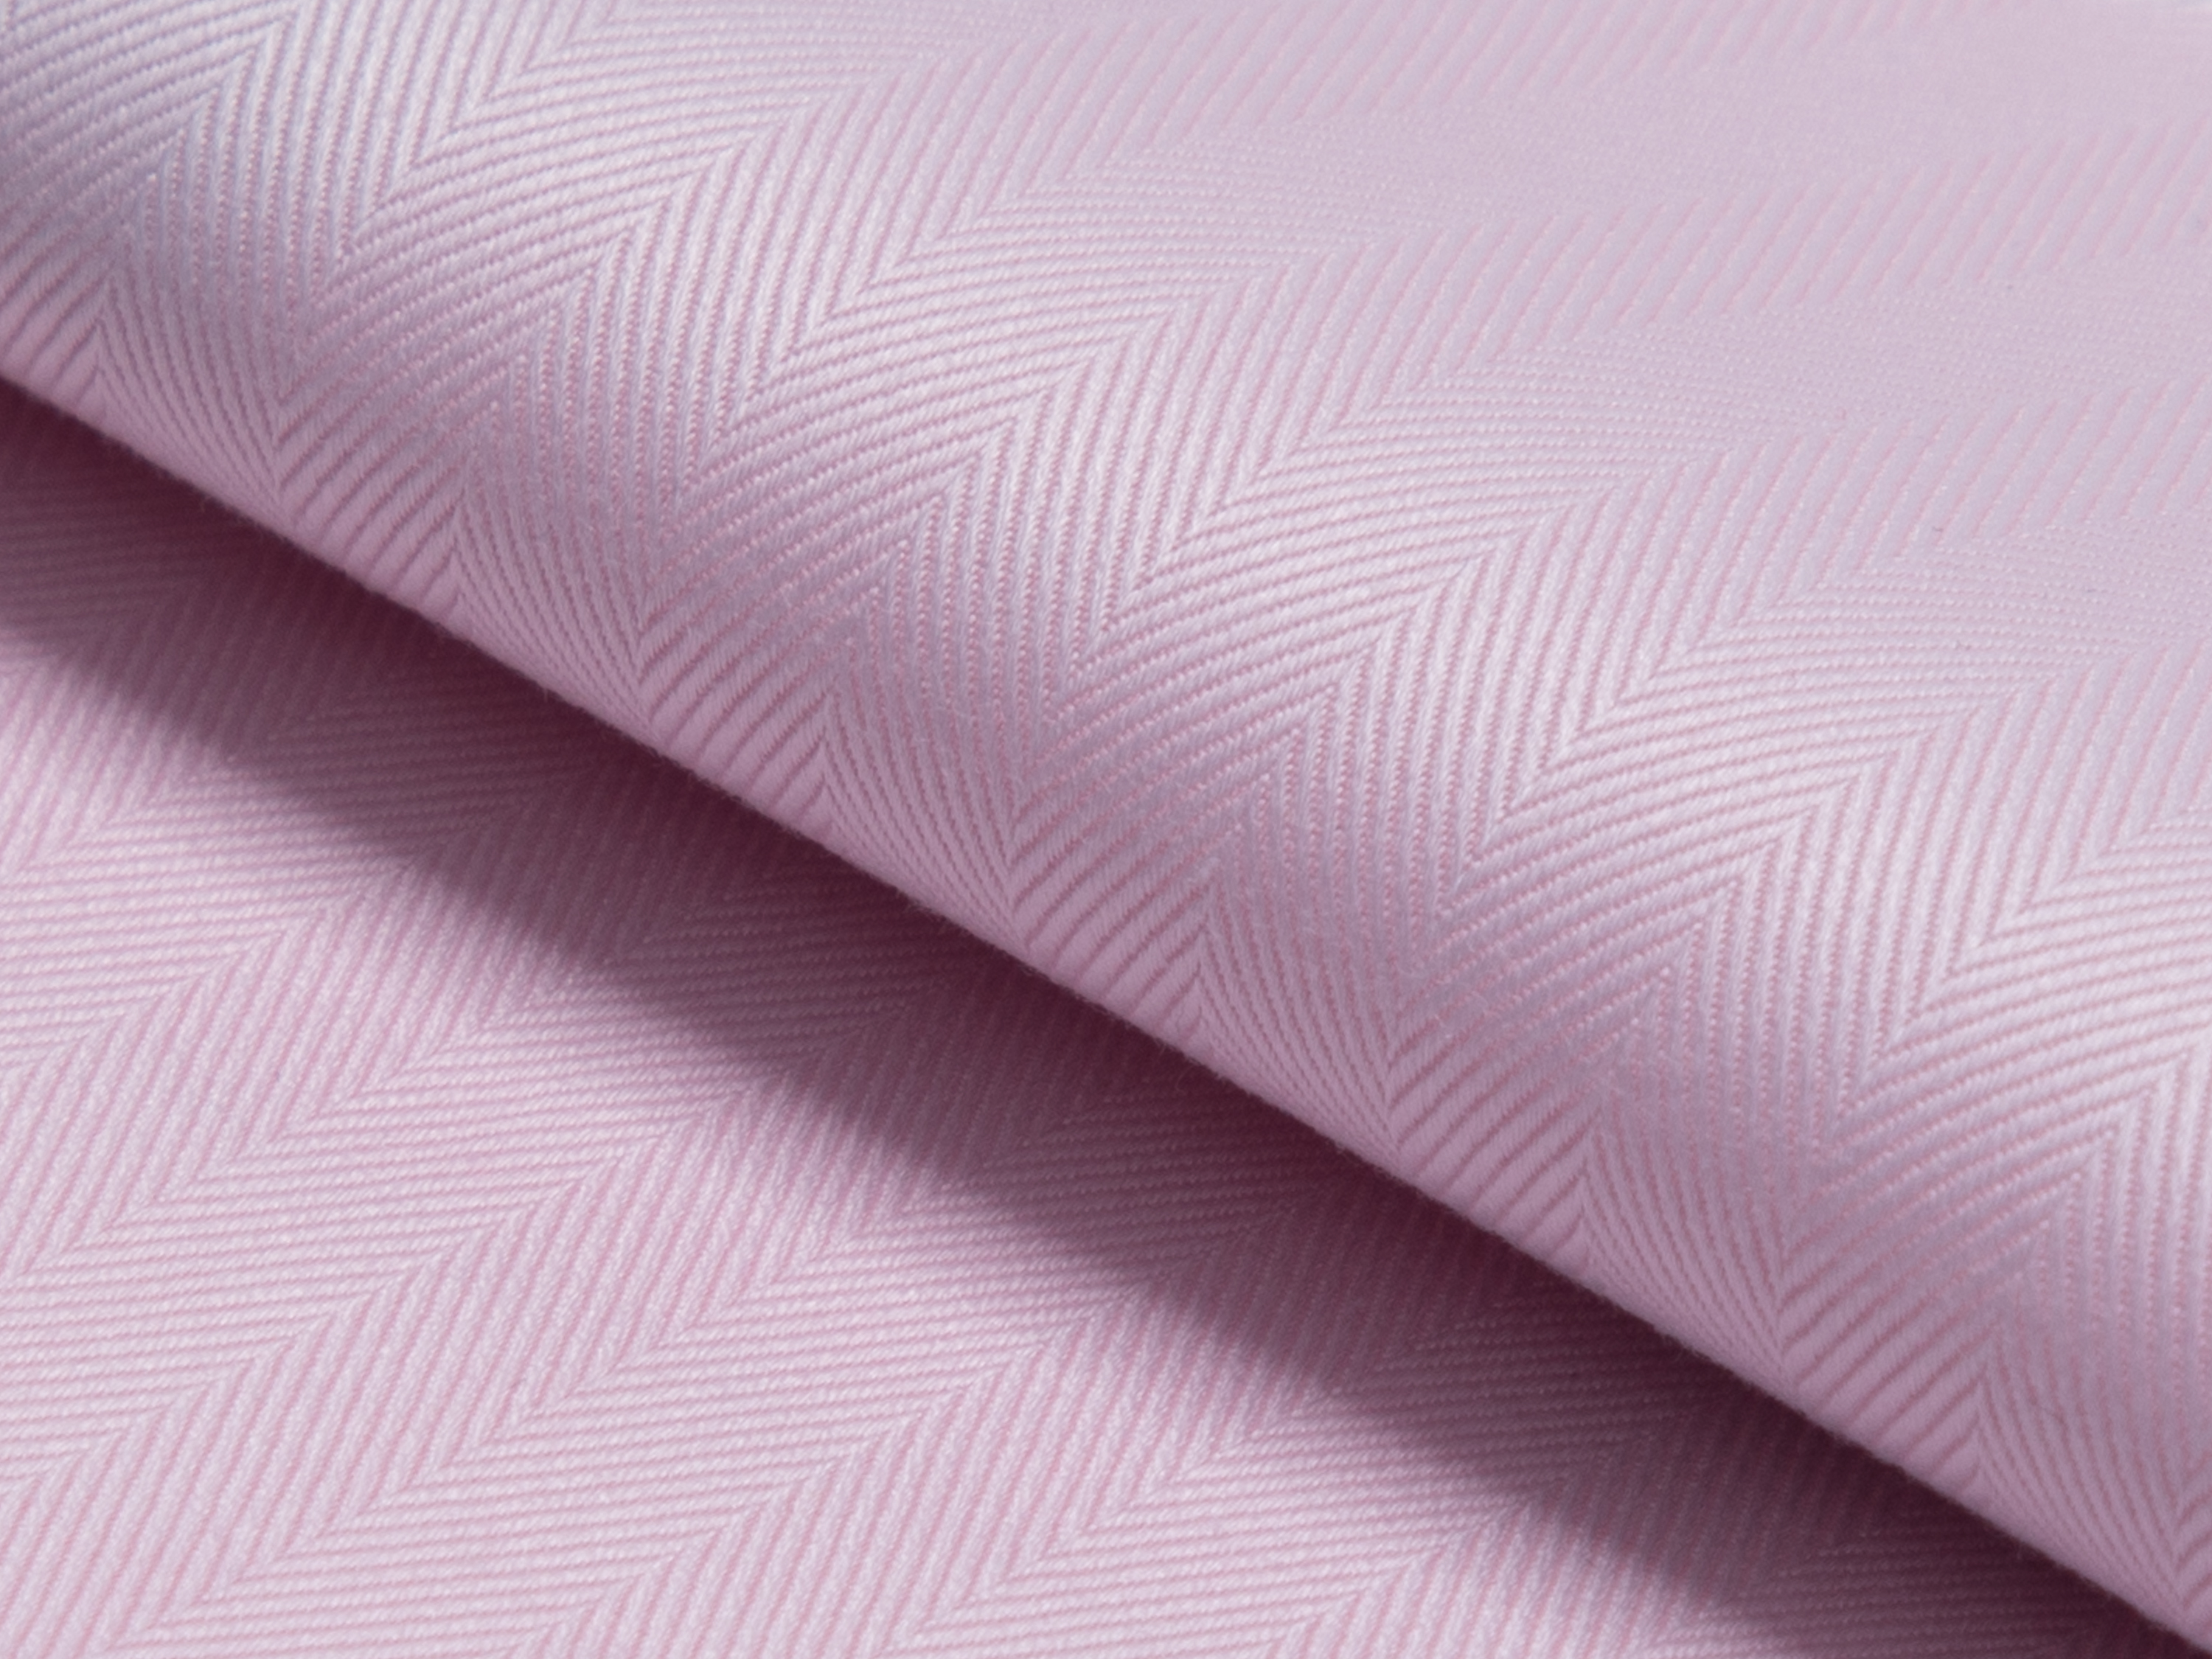 Buy tailor made shirts online - MAYFAIR - Herringbone Pink